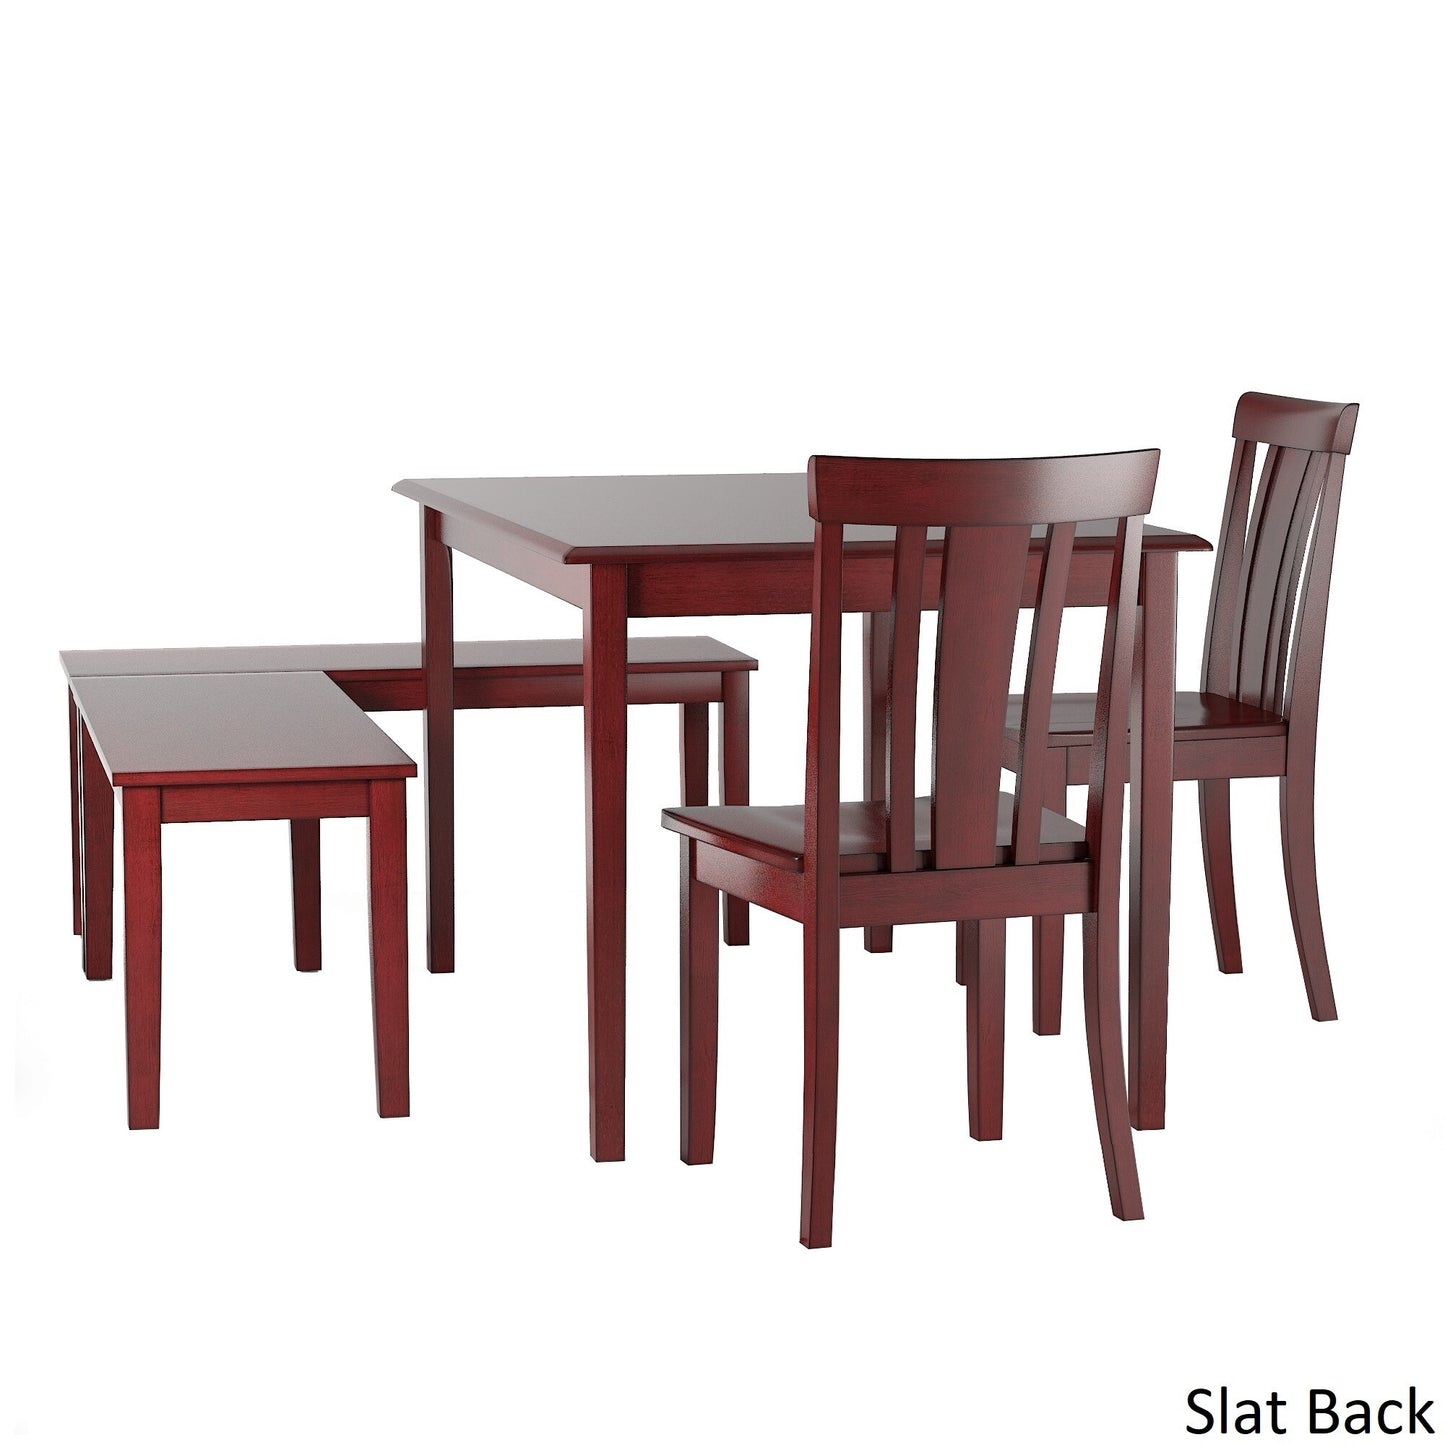 Wood 5-Piece Breakfast Nook Set - Antique Berry Red Finish, Slat Back, Rectangular Table